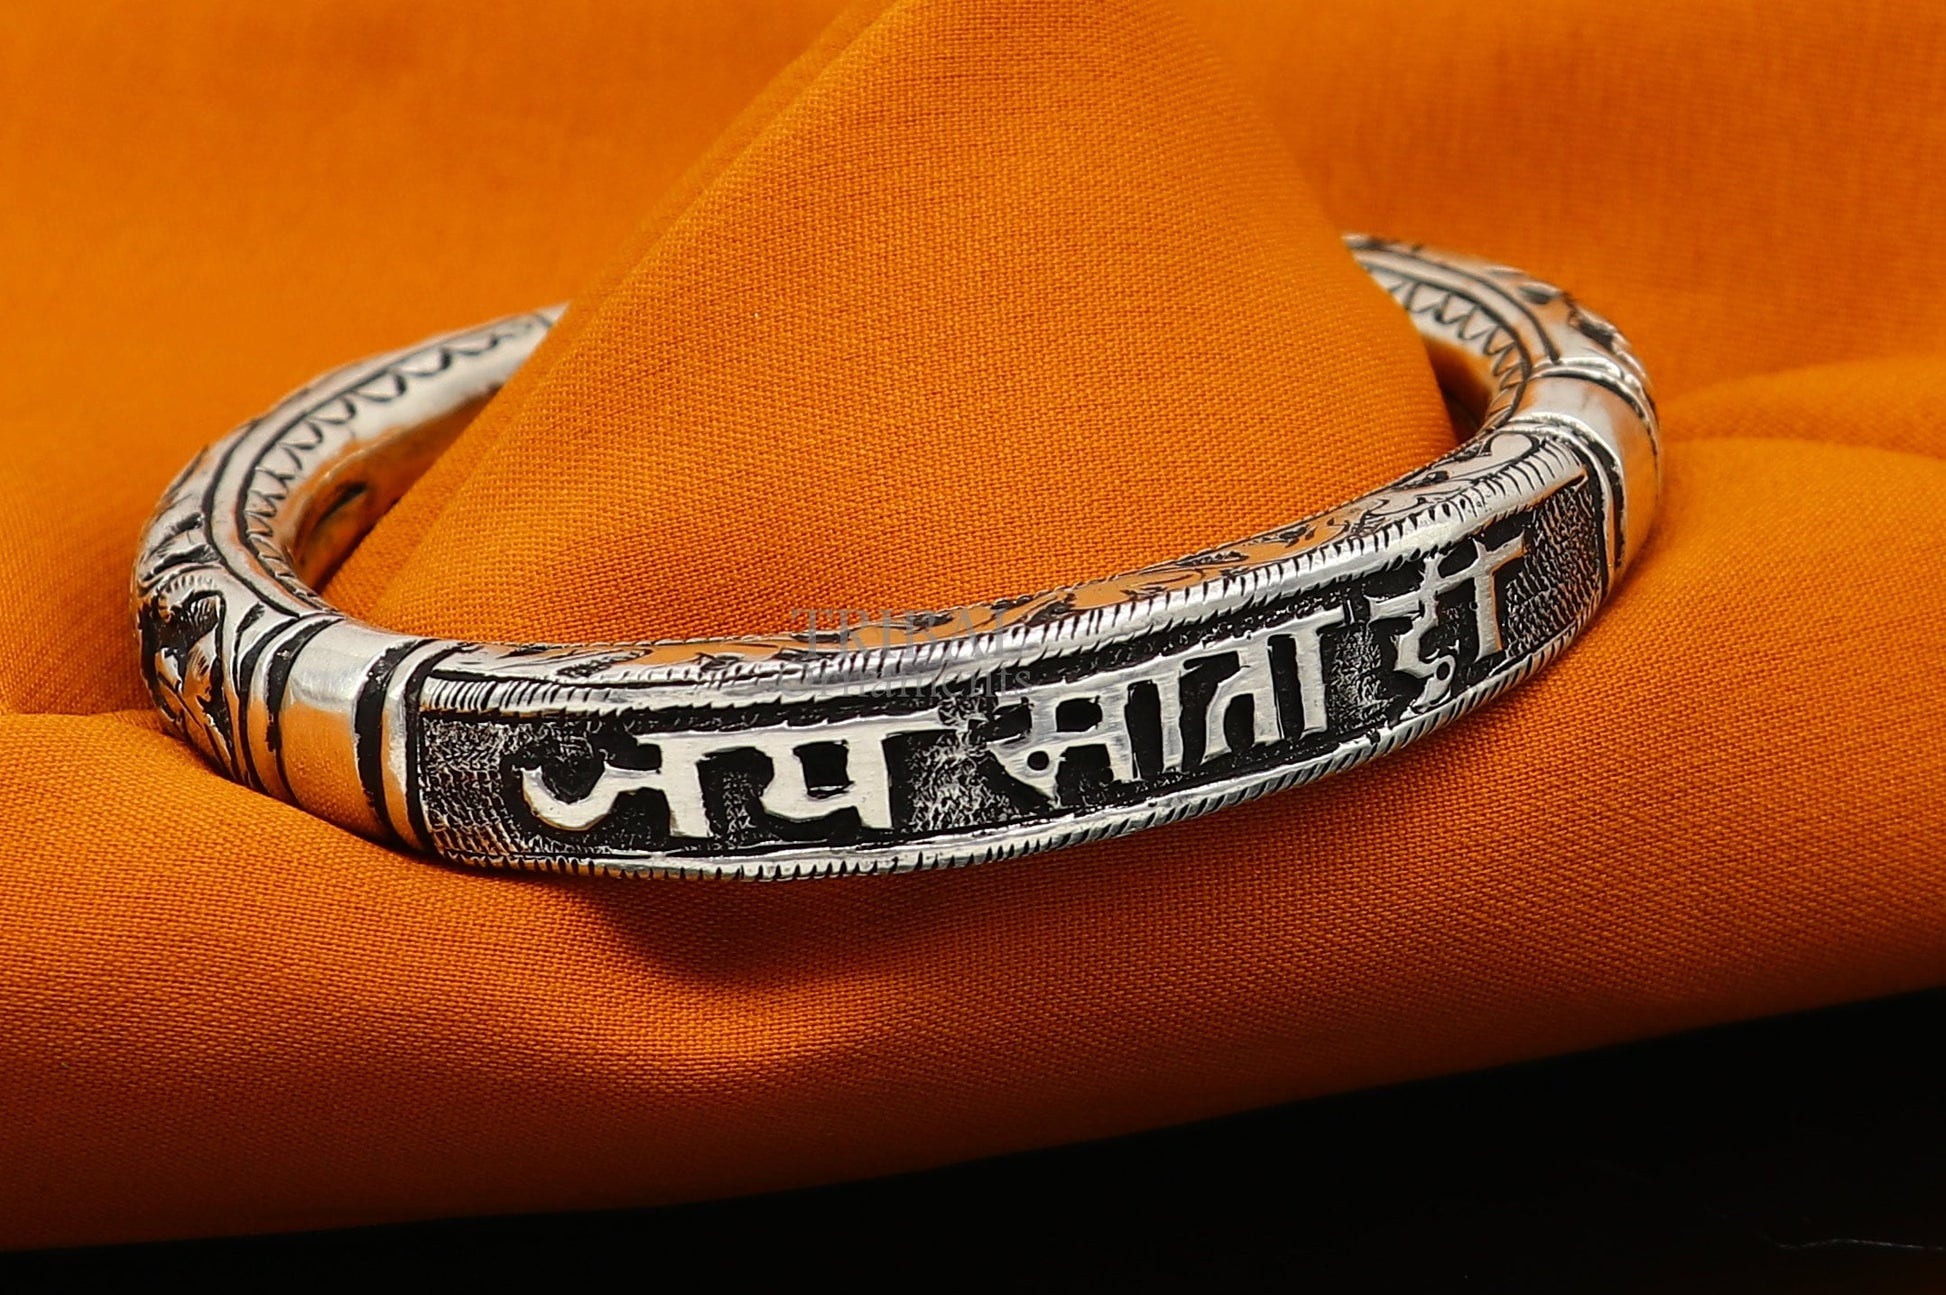 925 sterling silver handmade custom design Divine mantra " Jai Mata Di" Bangle cuff bracelet kada, best gifting unisex tribal jewelry NSK656 - TRIBAL ORNAMENTS